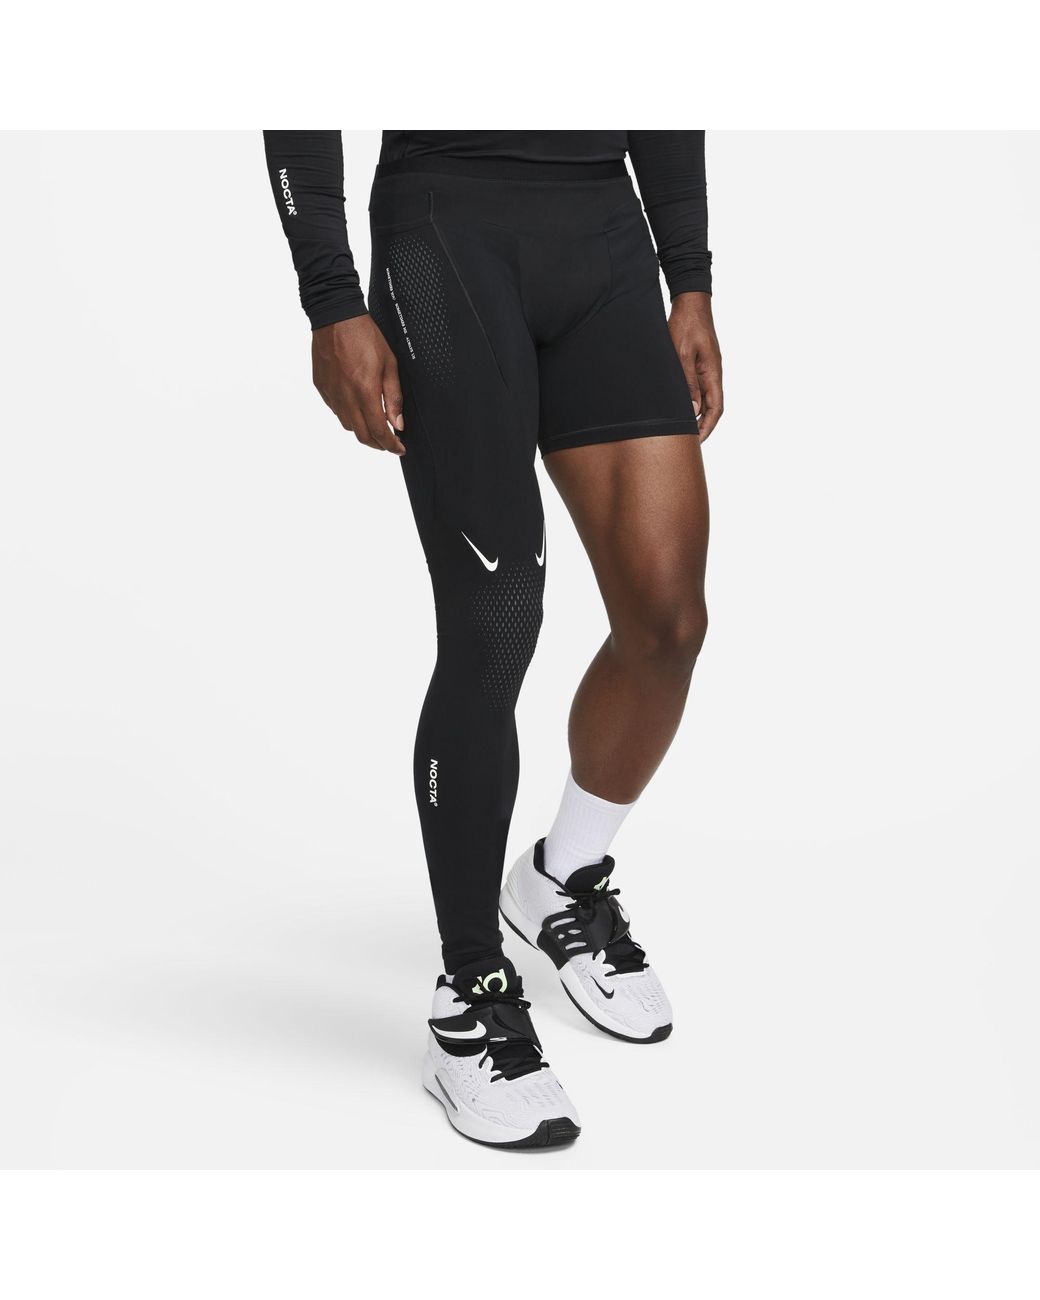 Nike Nocta Single-leg Basketball Tights in Black for Men